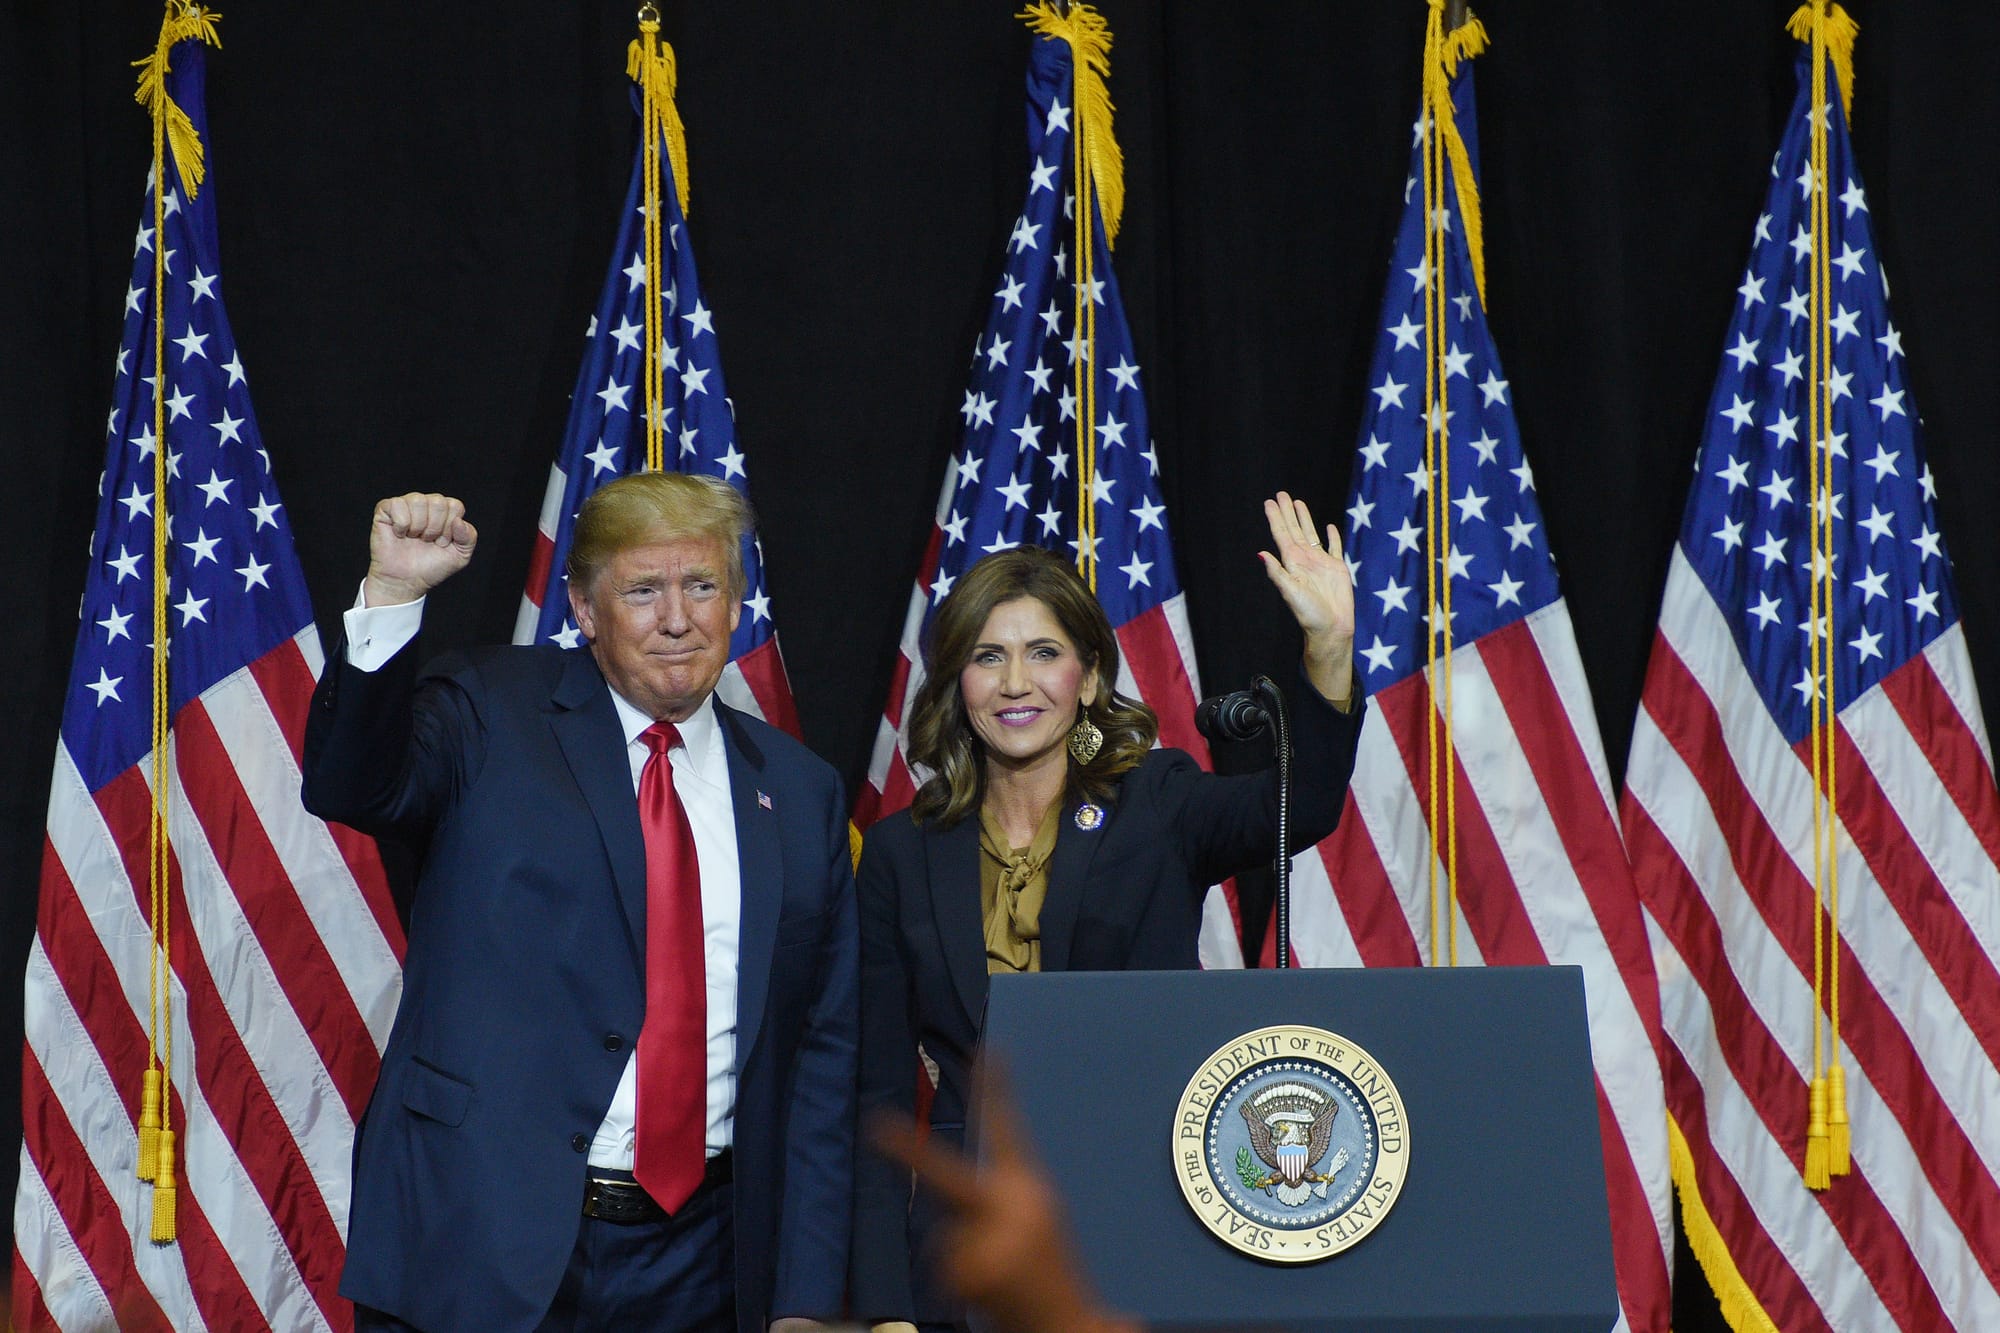 Kristi Noem waves to supporters alongside President Trump in 2018